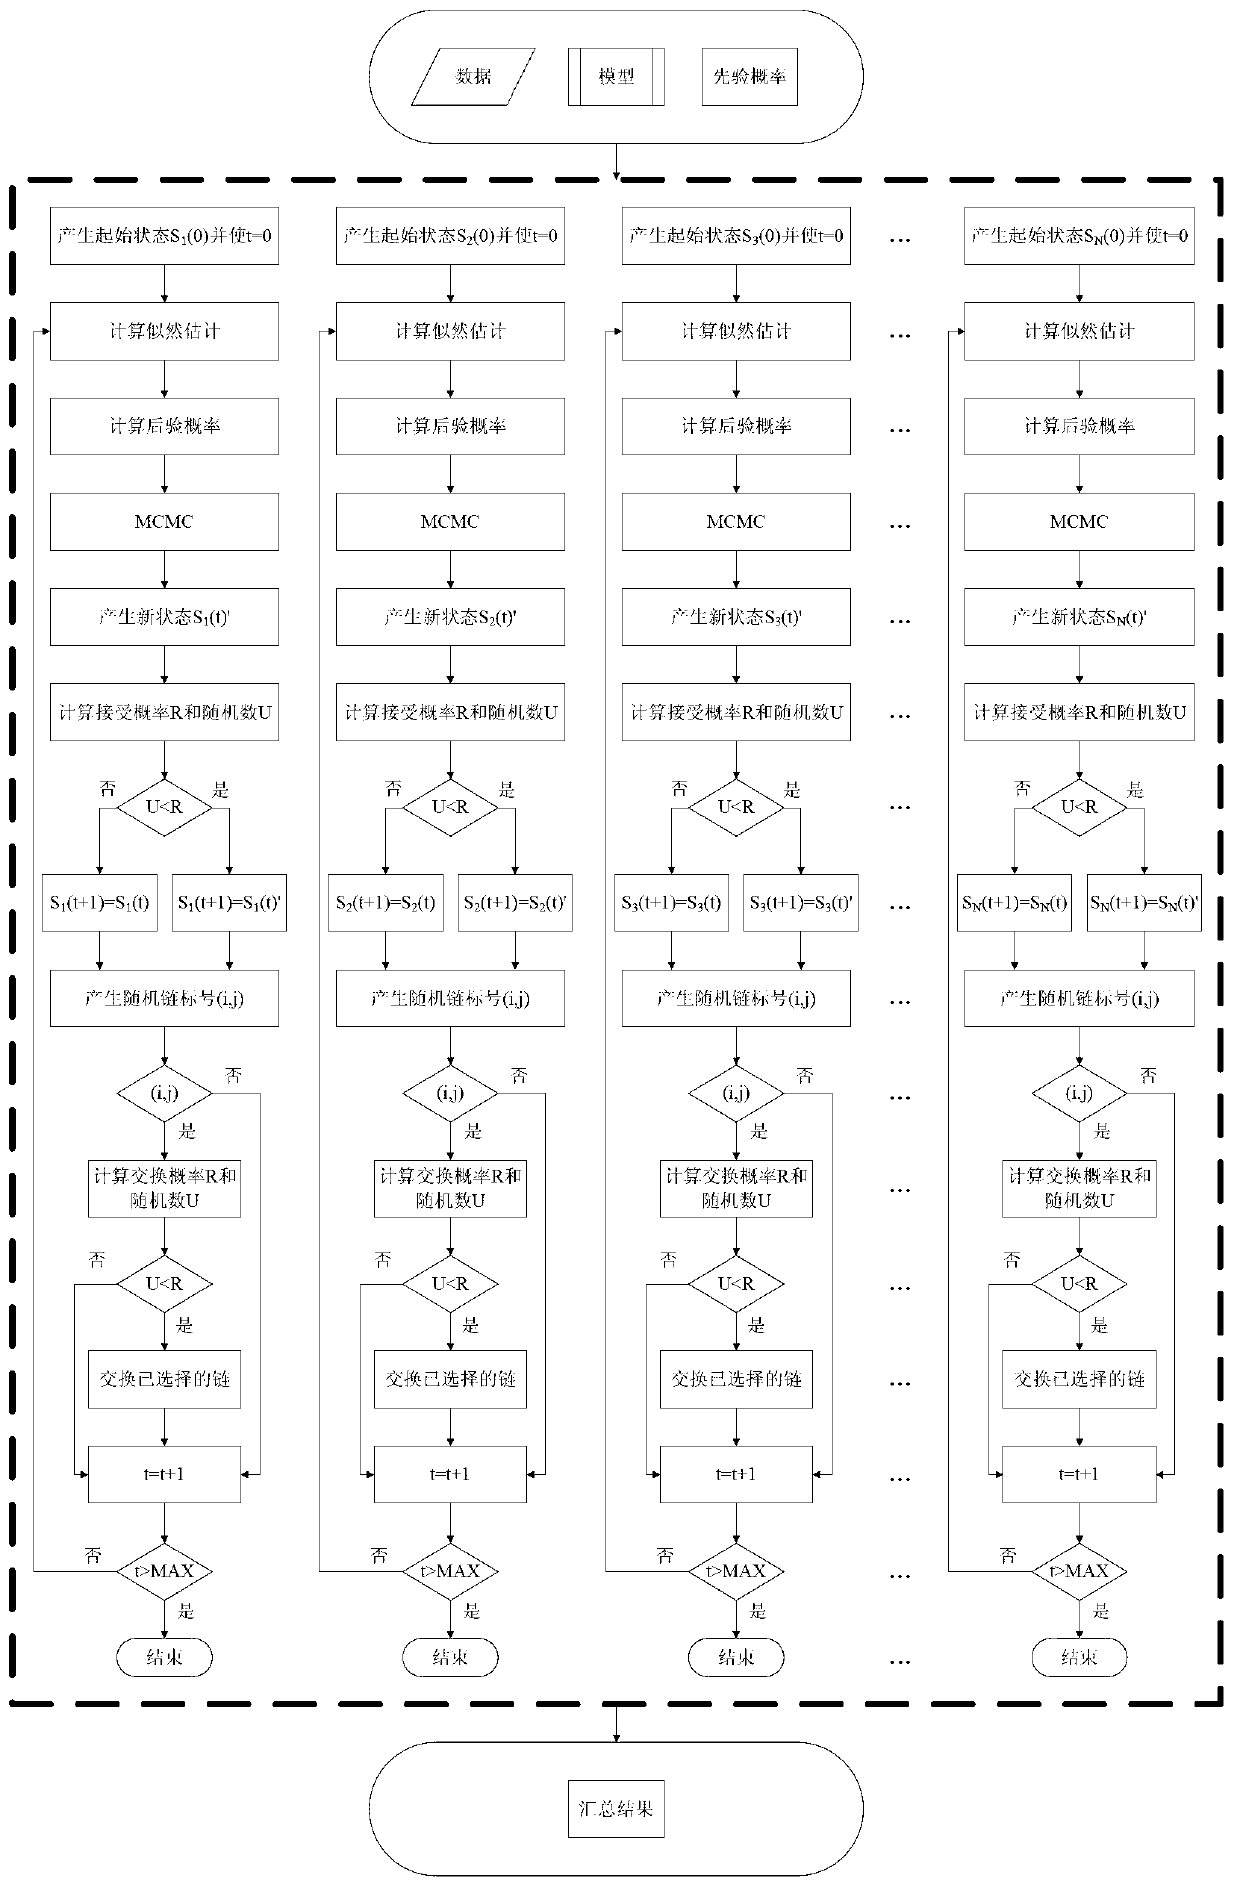 Markov chain Monte Carlo (MCMC)-based parallel sorting method